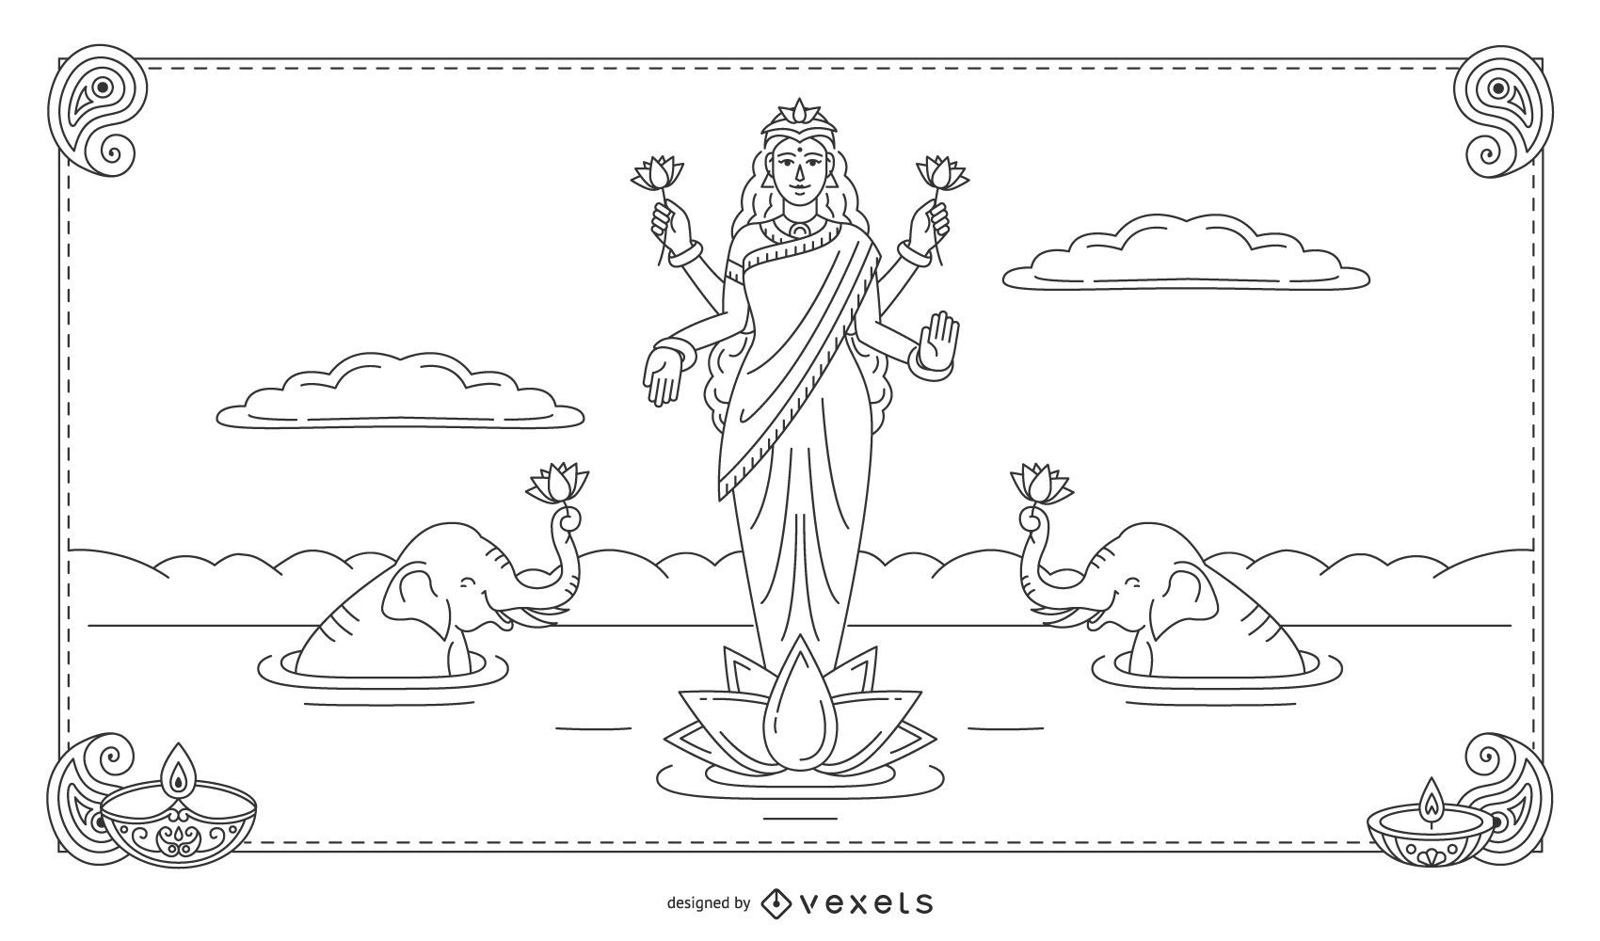 Diwali Lakshmi line illustration